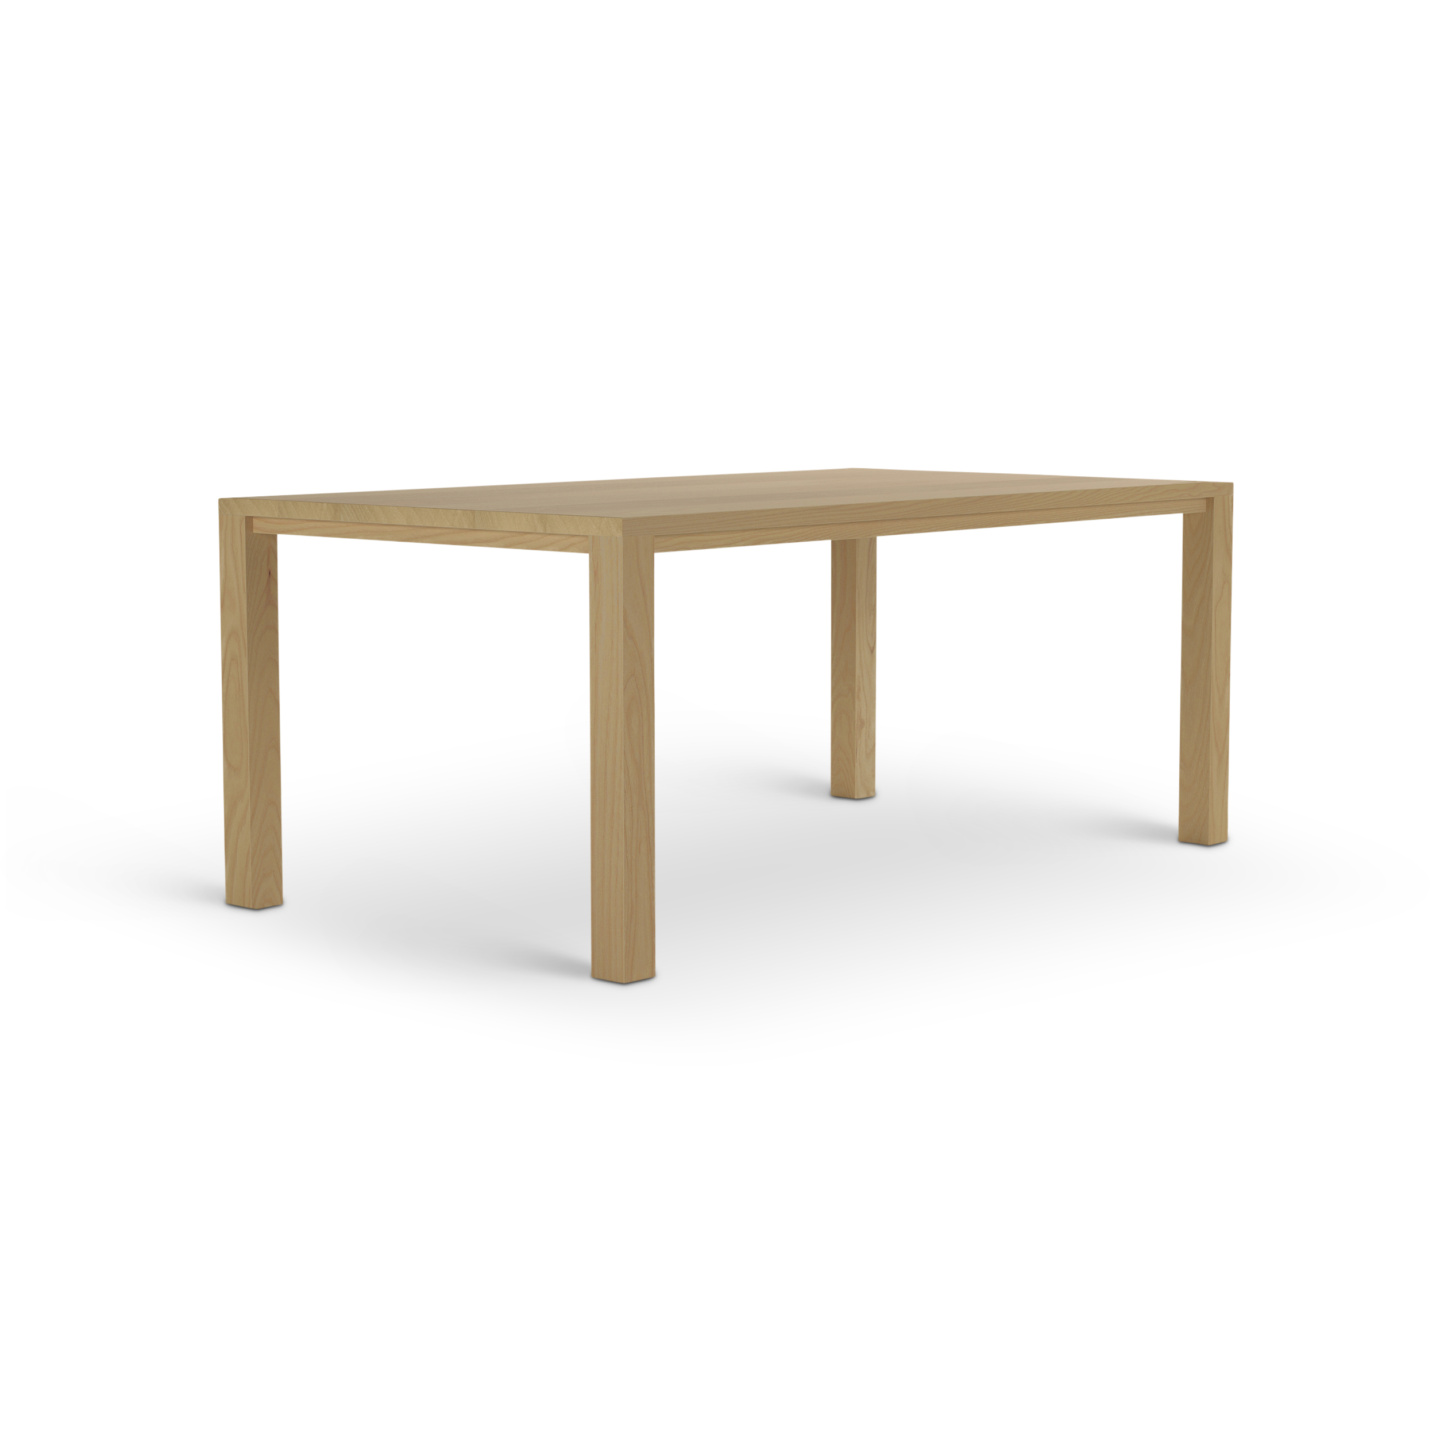 Solid Ash wood Swedish Table